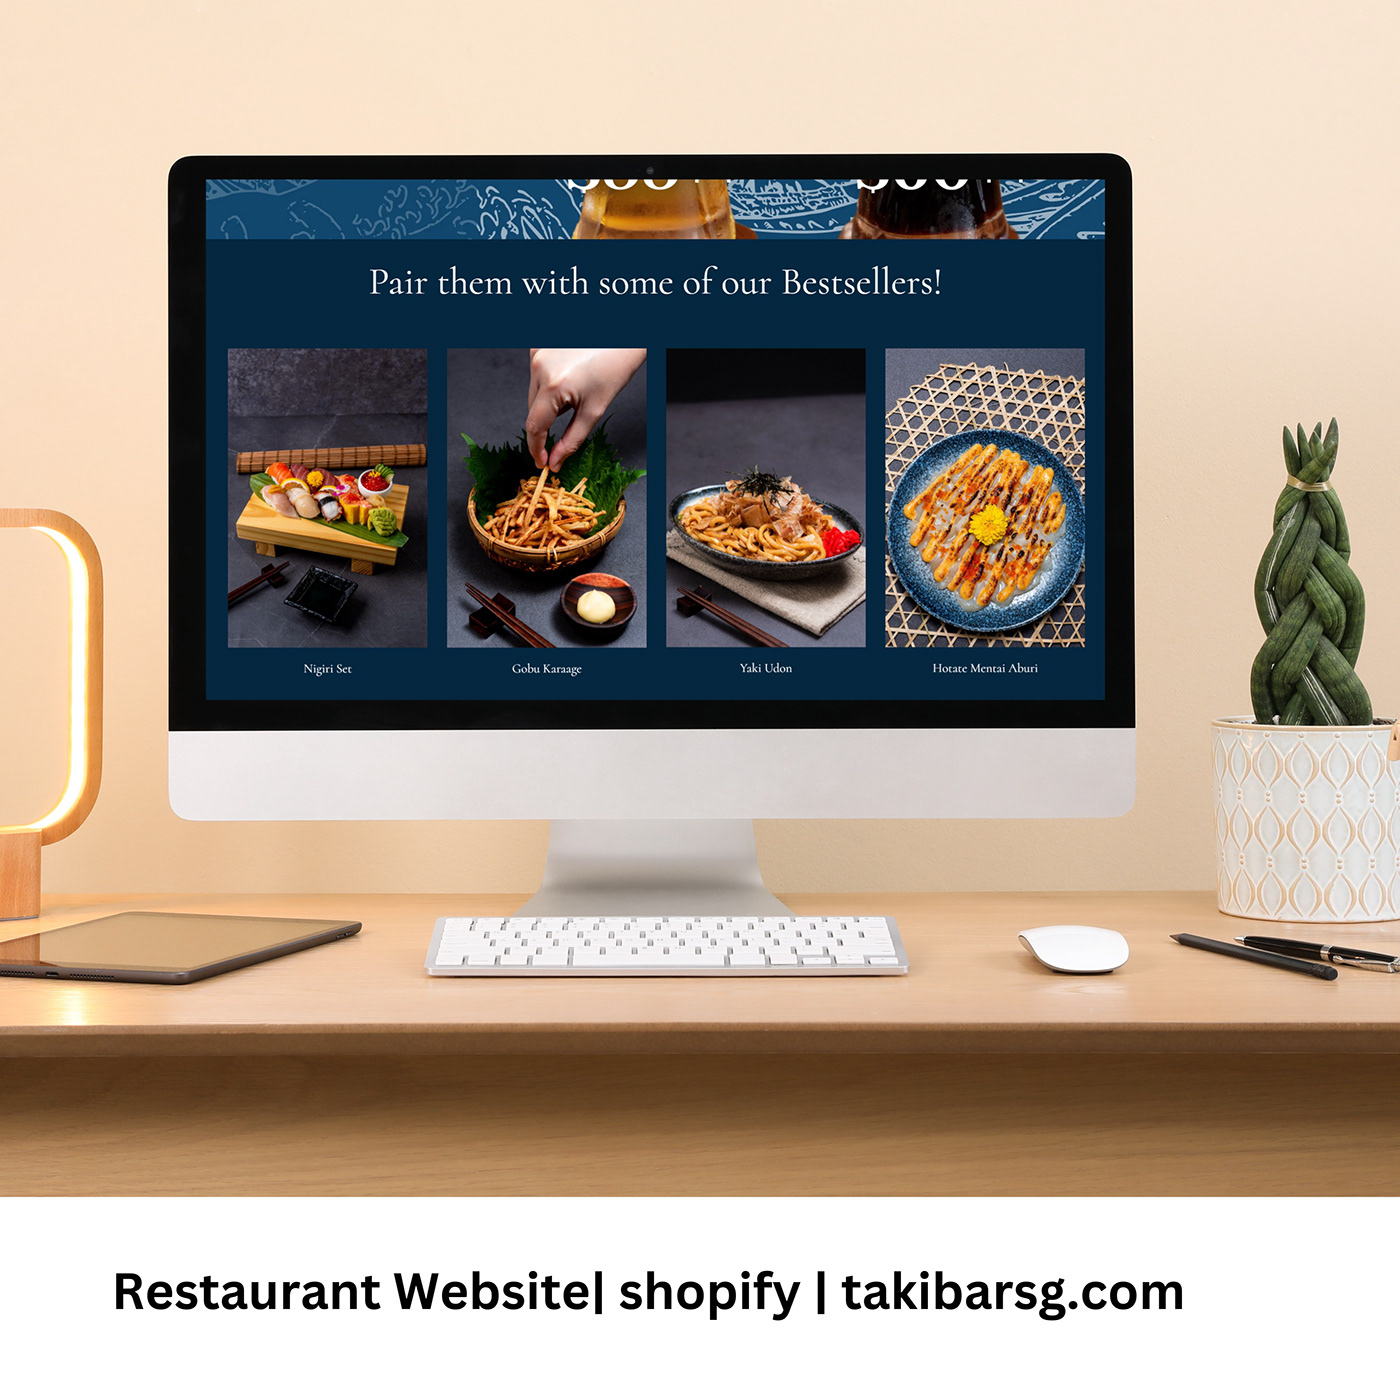 Restaurant Website Website website development Website Design Shopify shopify store Shopify website Ecommerce ecommerce website restuarant website design